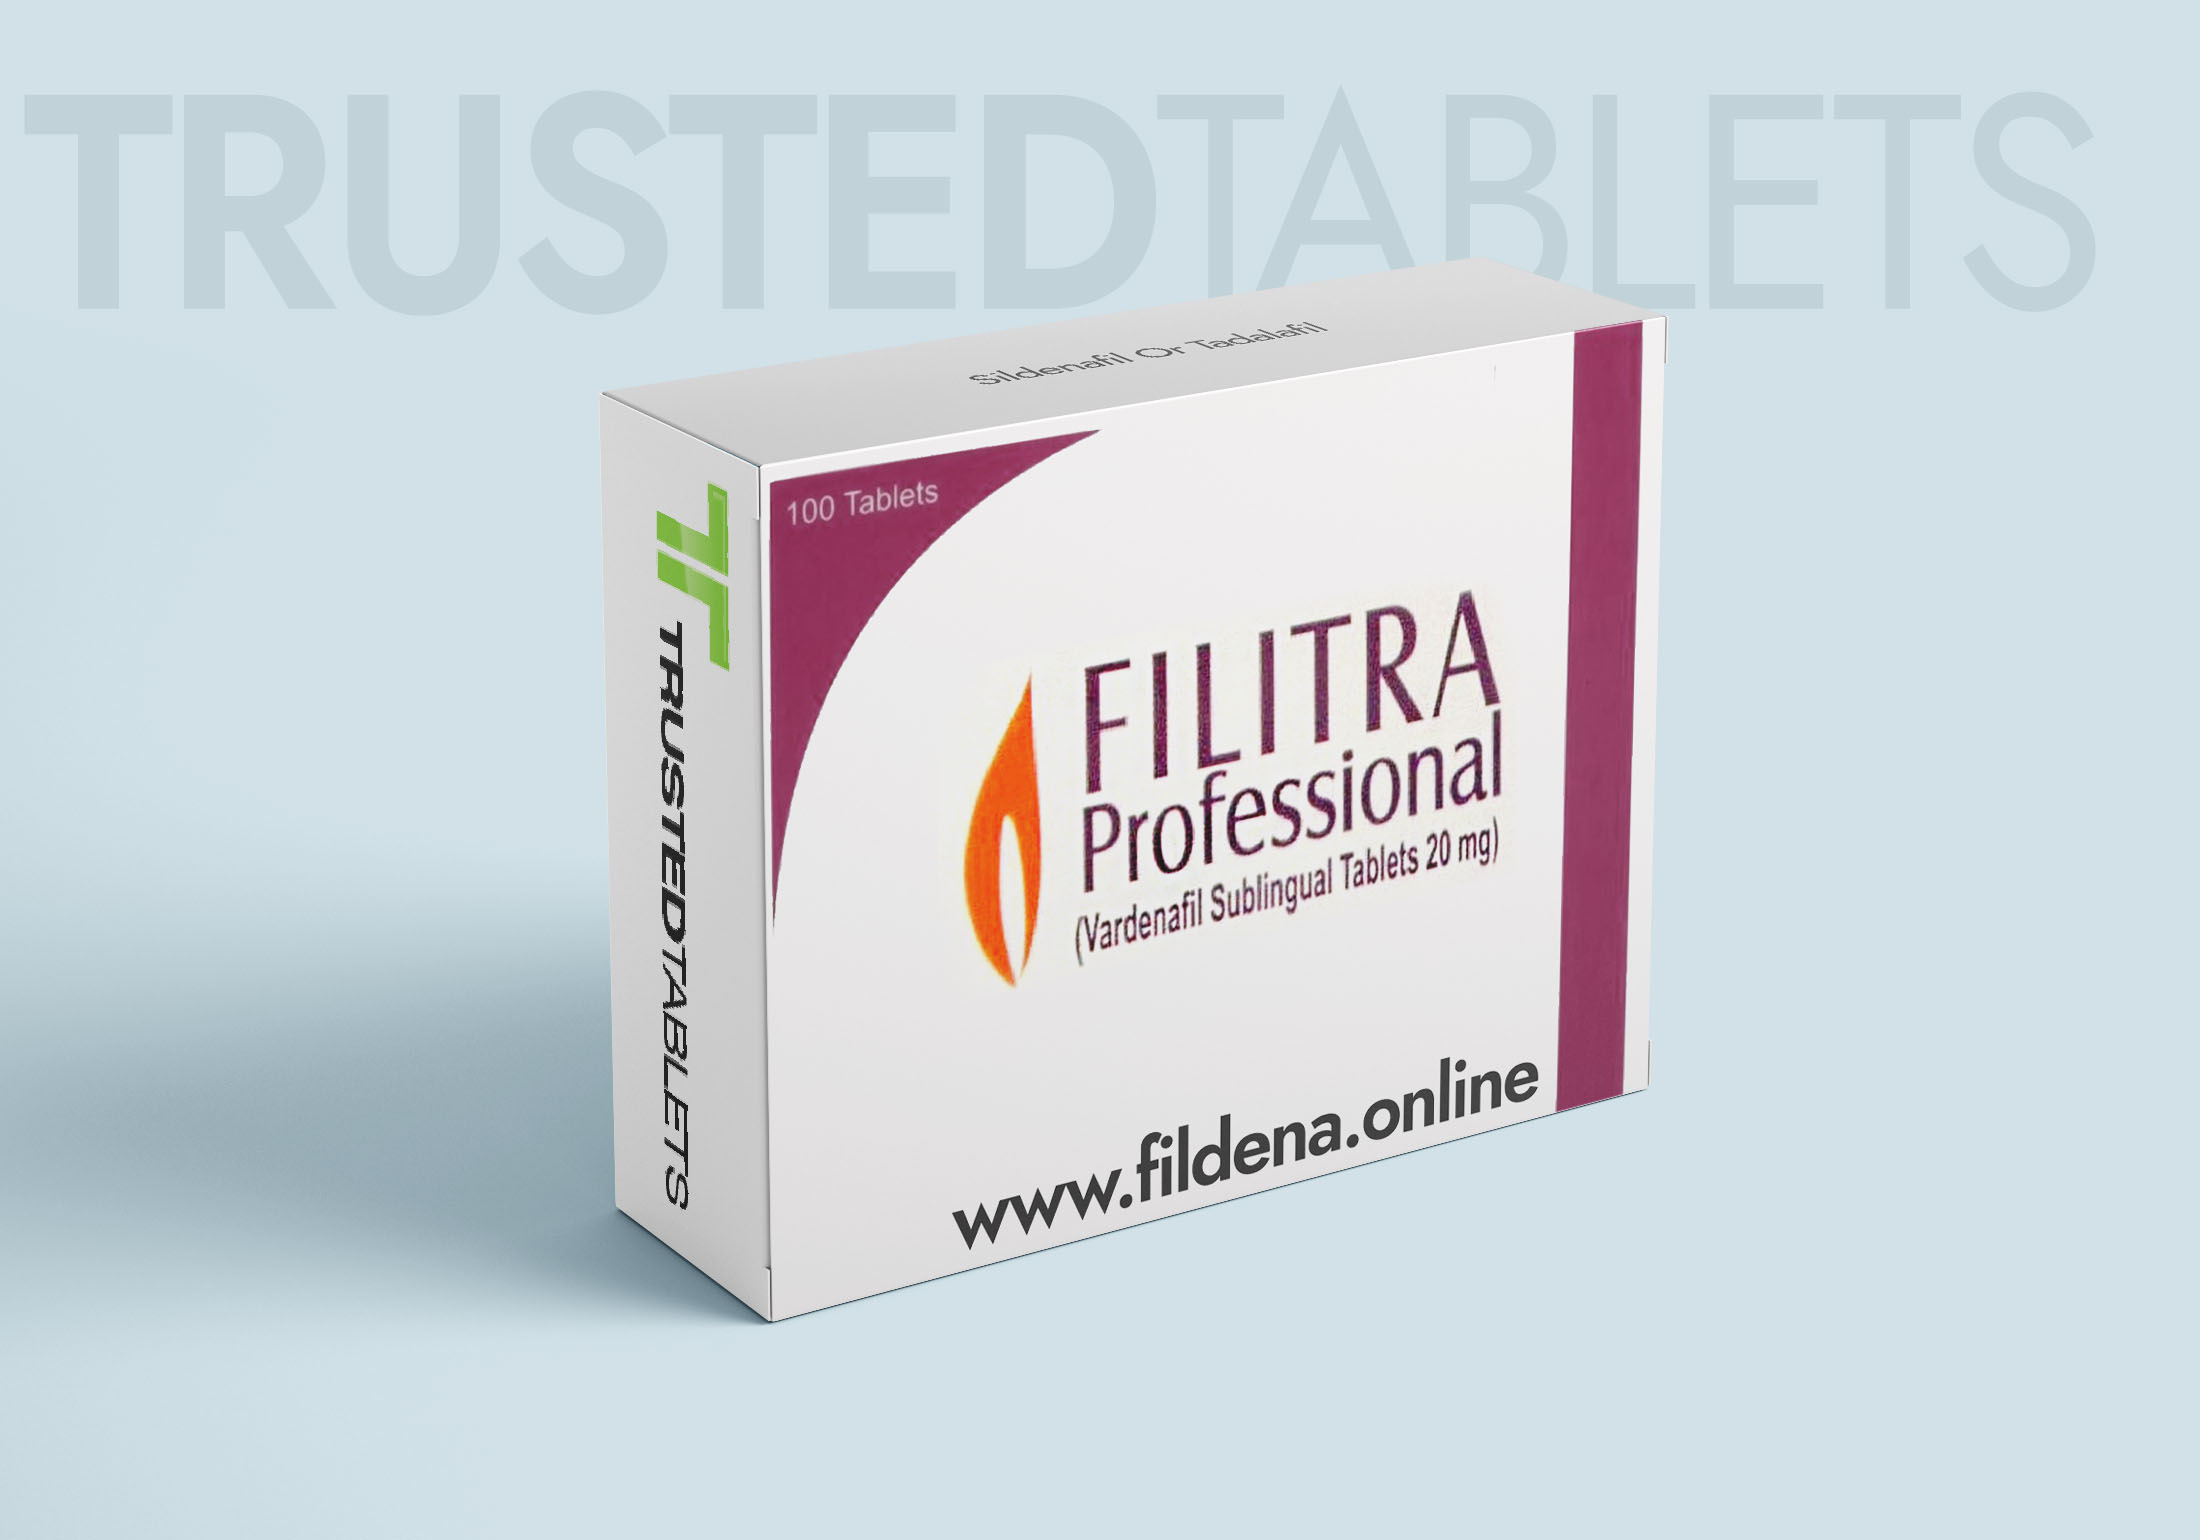 Filitra Professional TrustedTablets